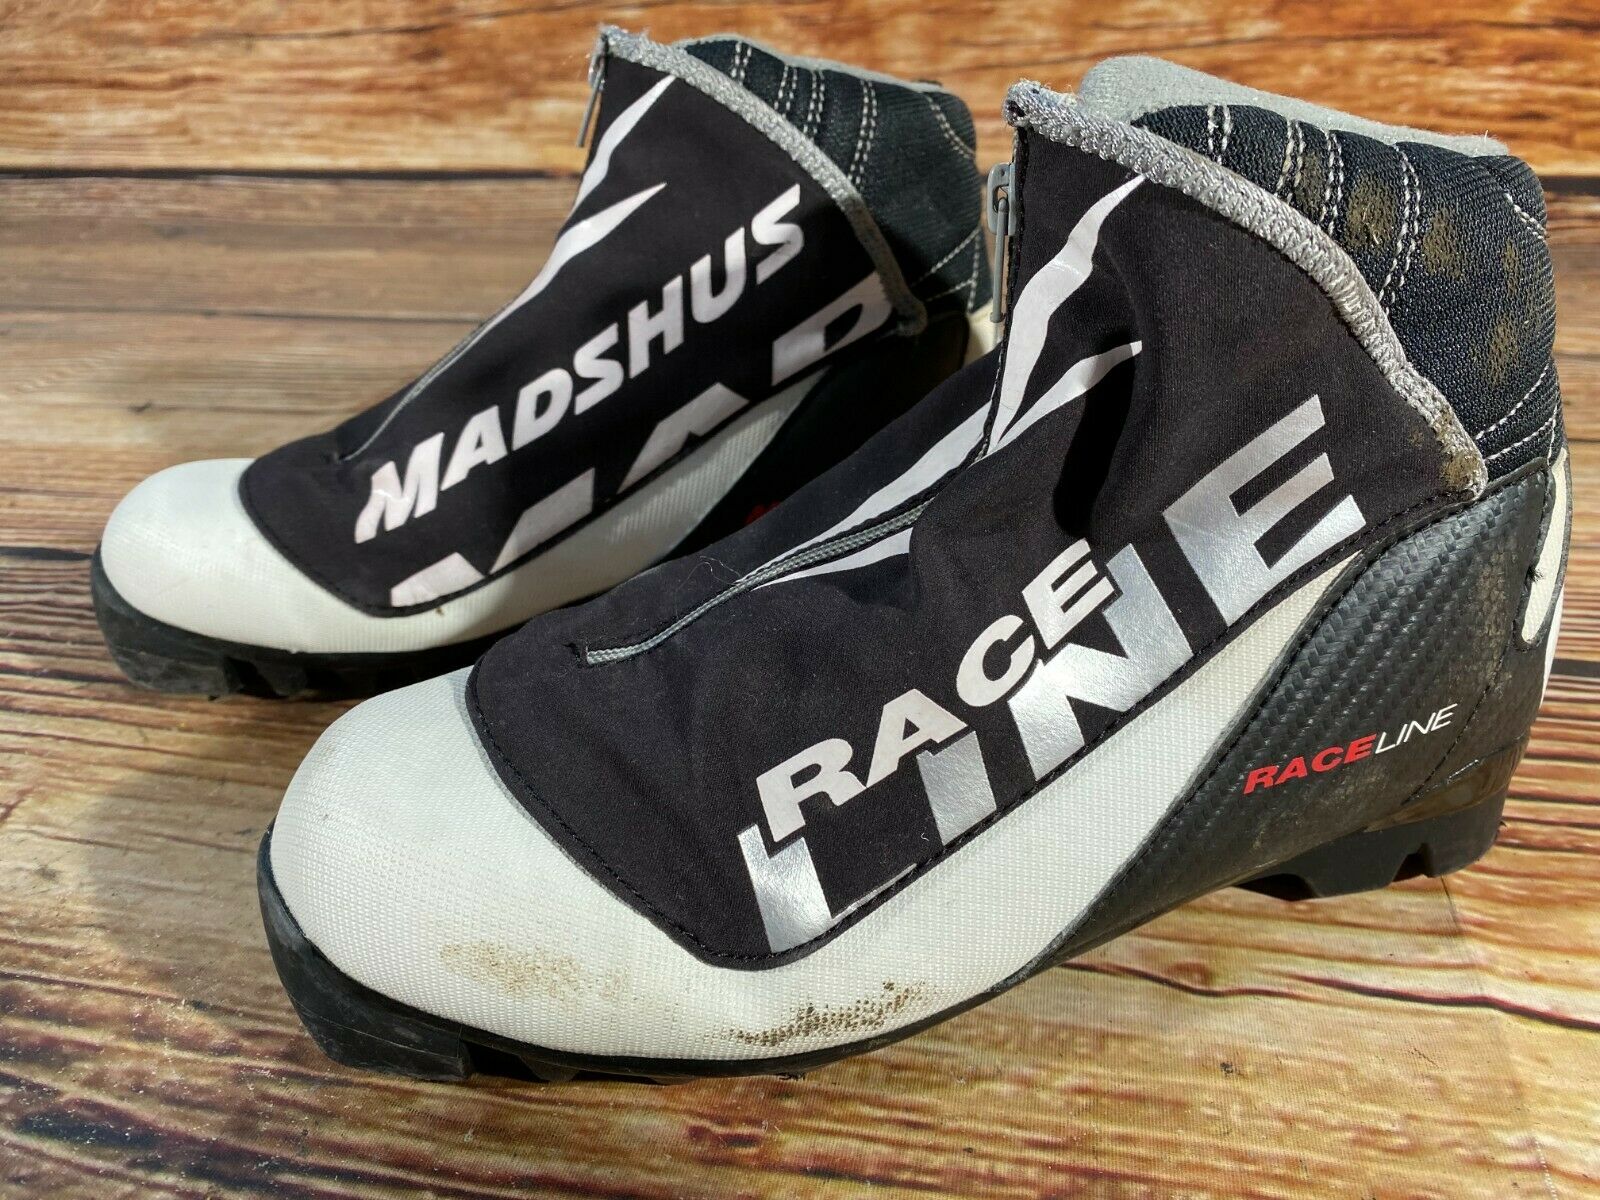 Madshus Race Line Cross Country Ski Boots Size Eu36 For Nnn M-34